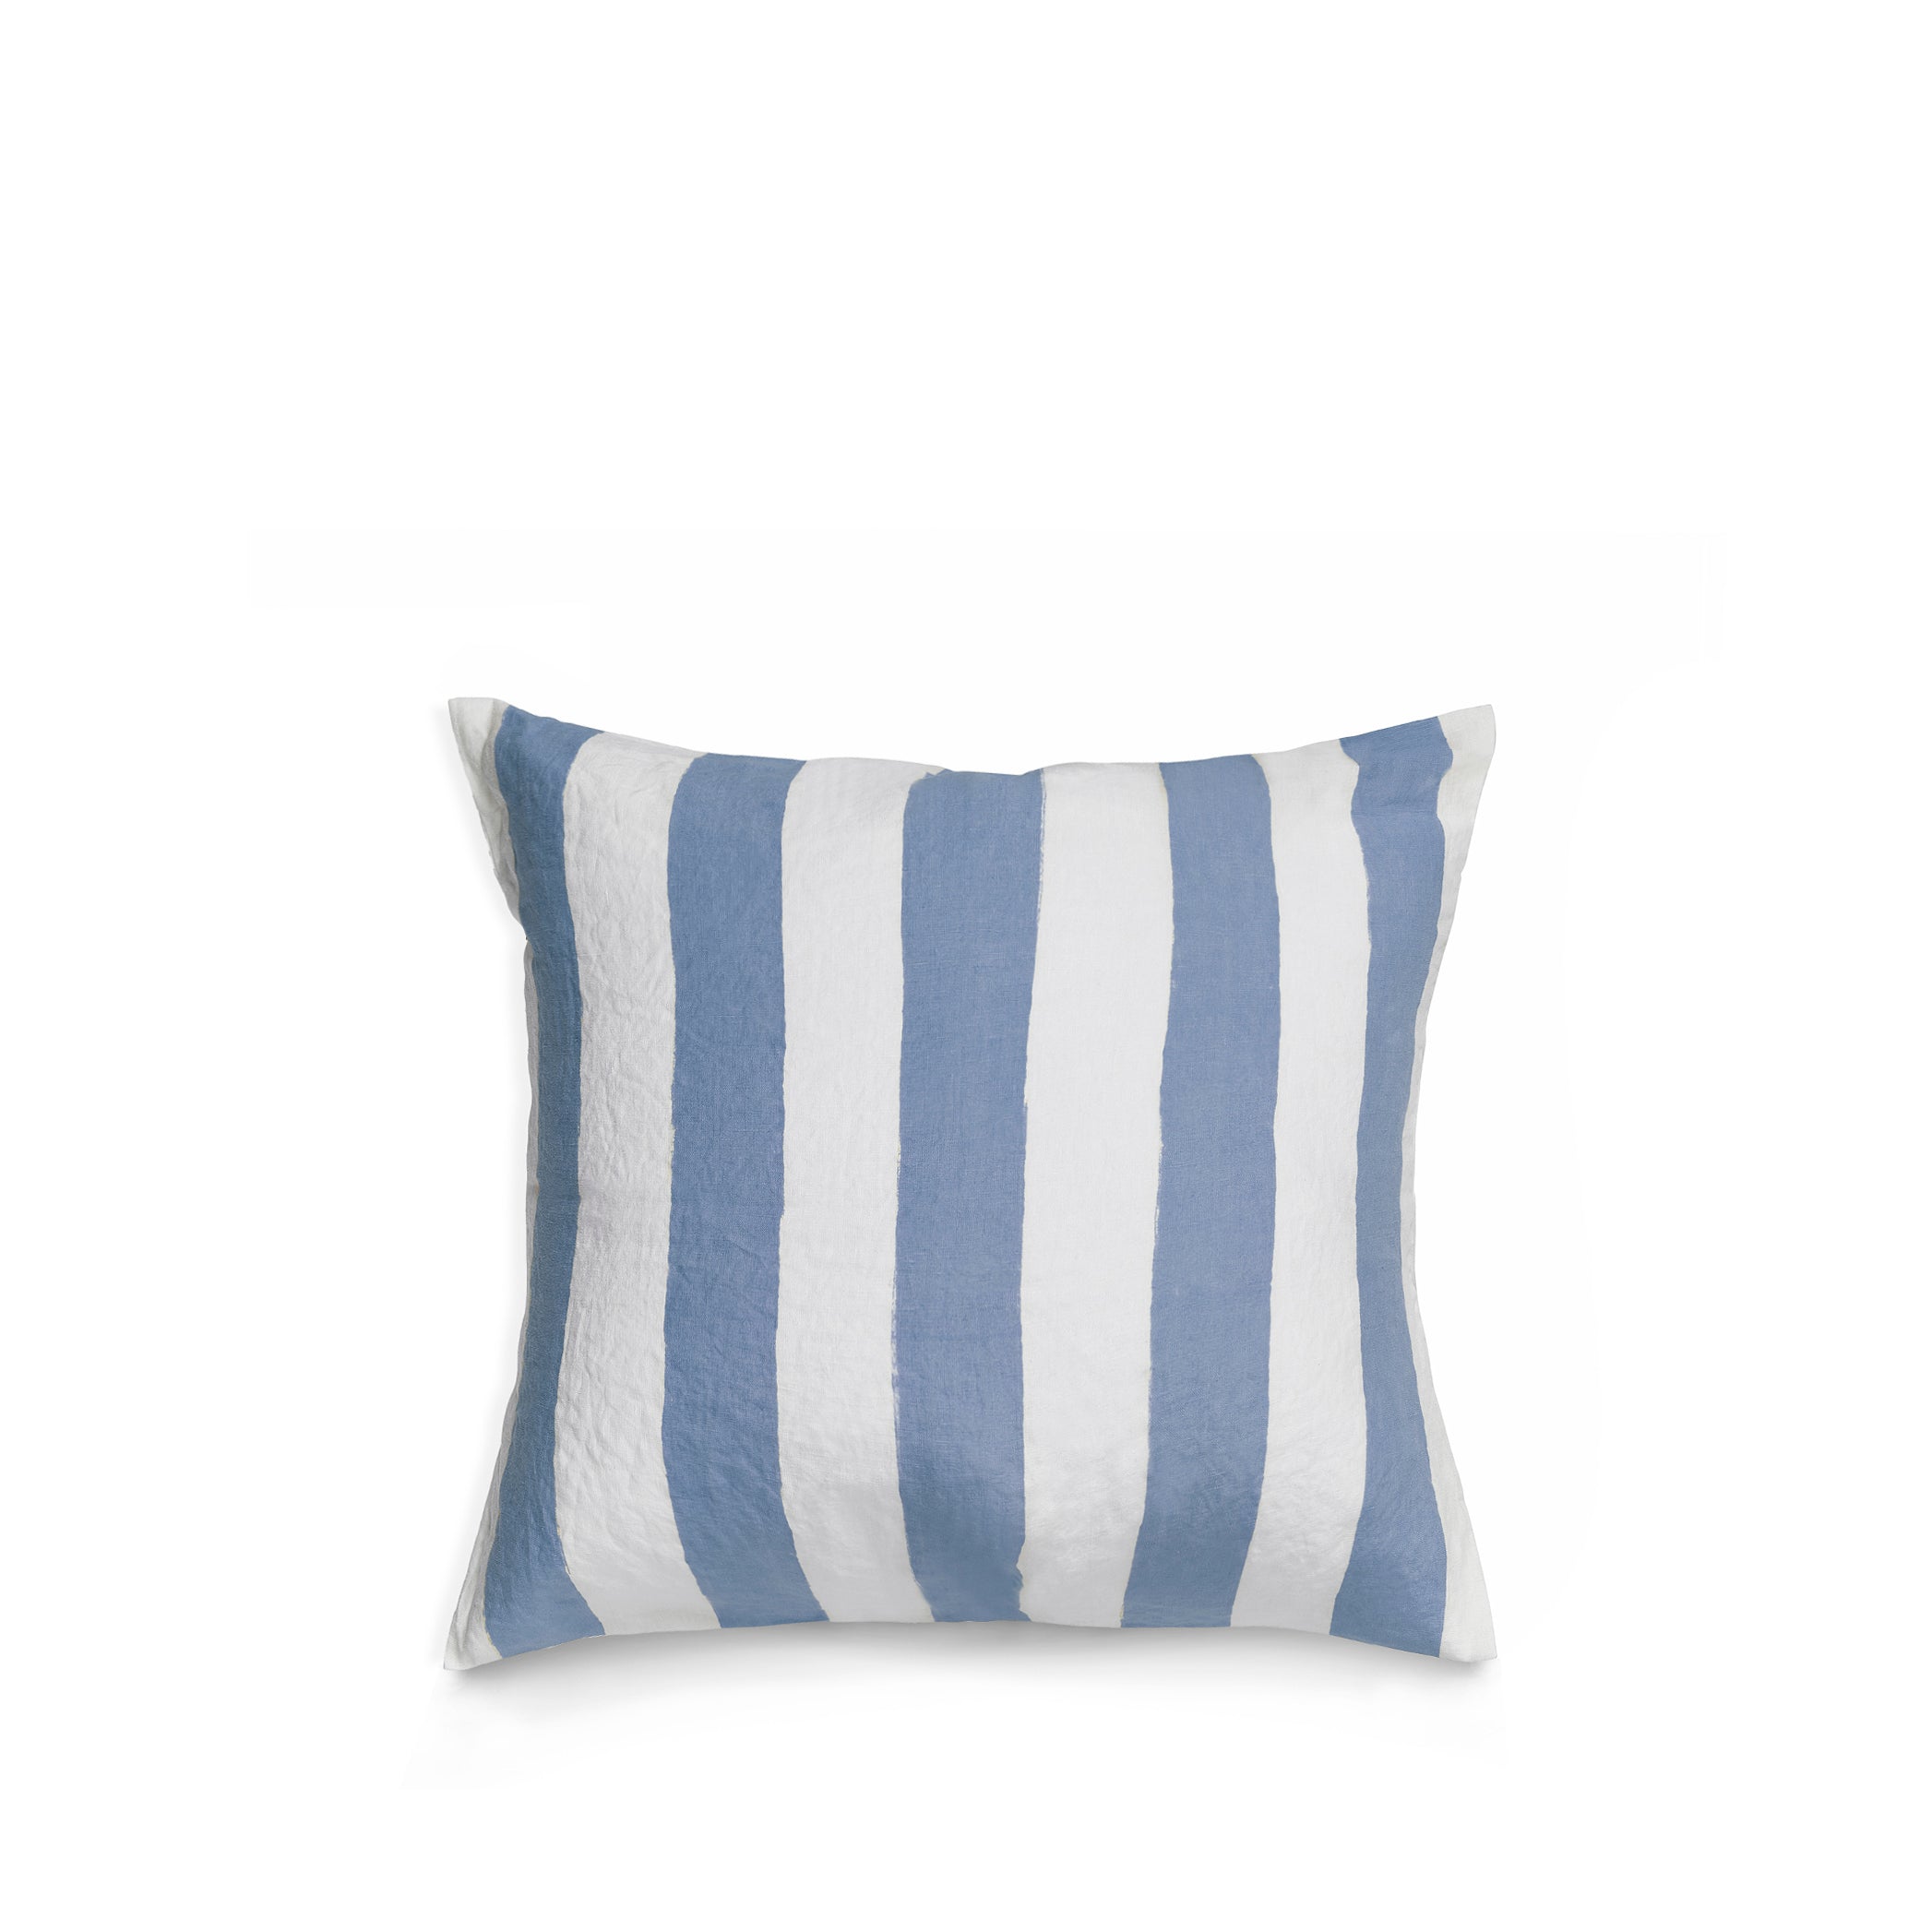 Hand Painted Stripe Linen Cushion in Pale Blue + White, 50cm x 50cm